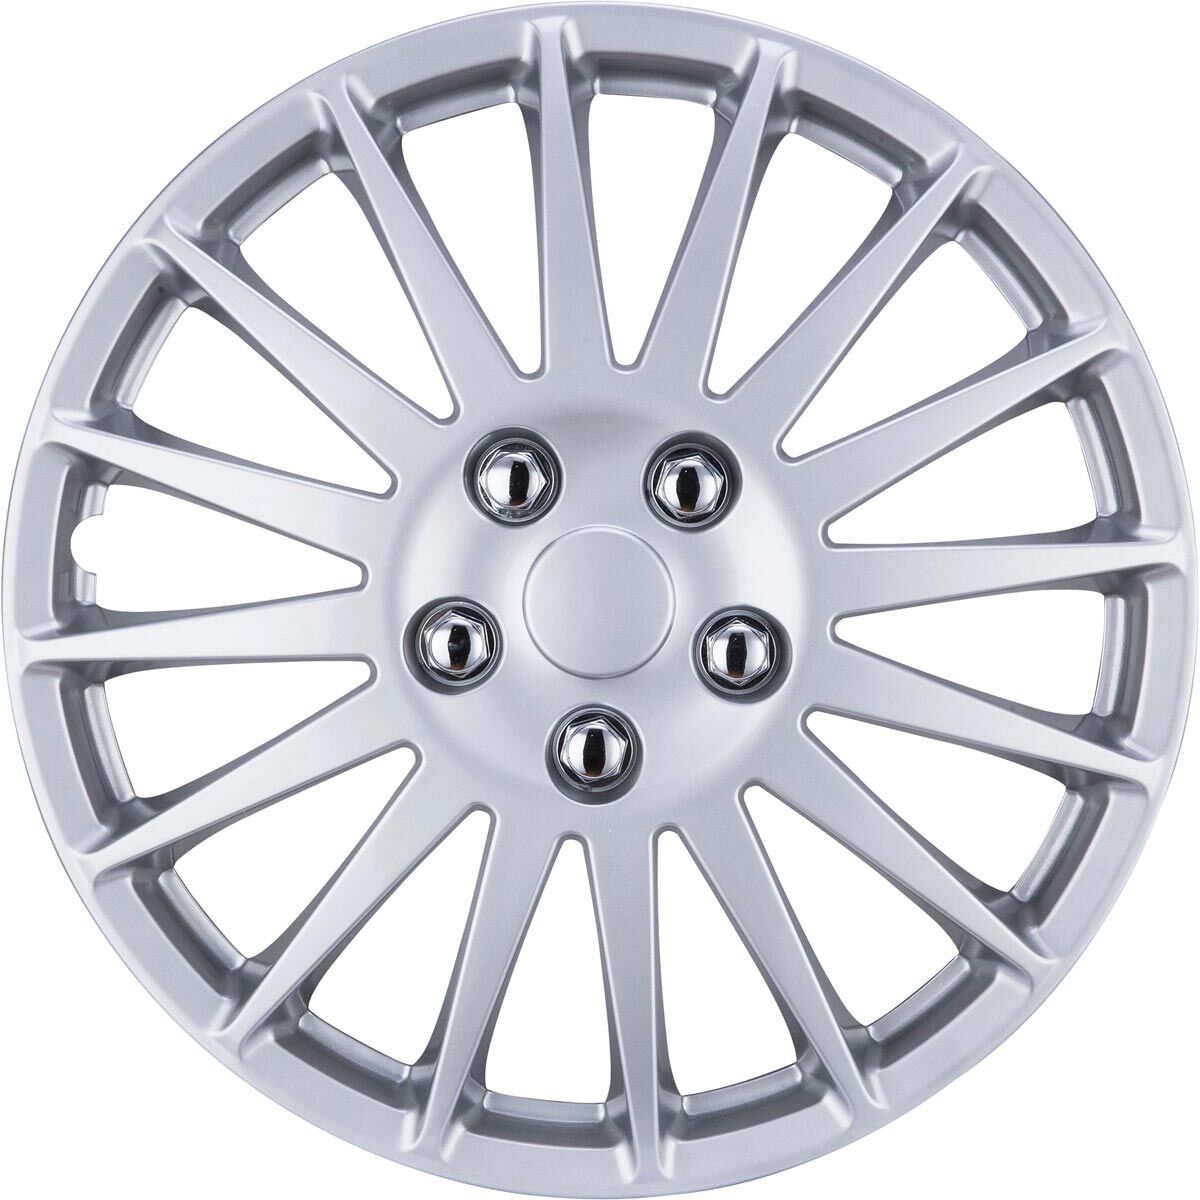 supercheap hubcaps